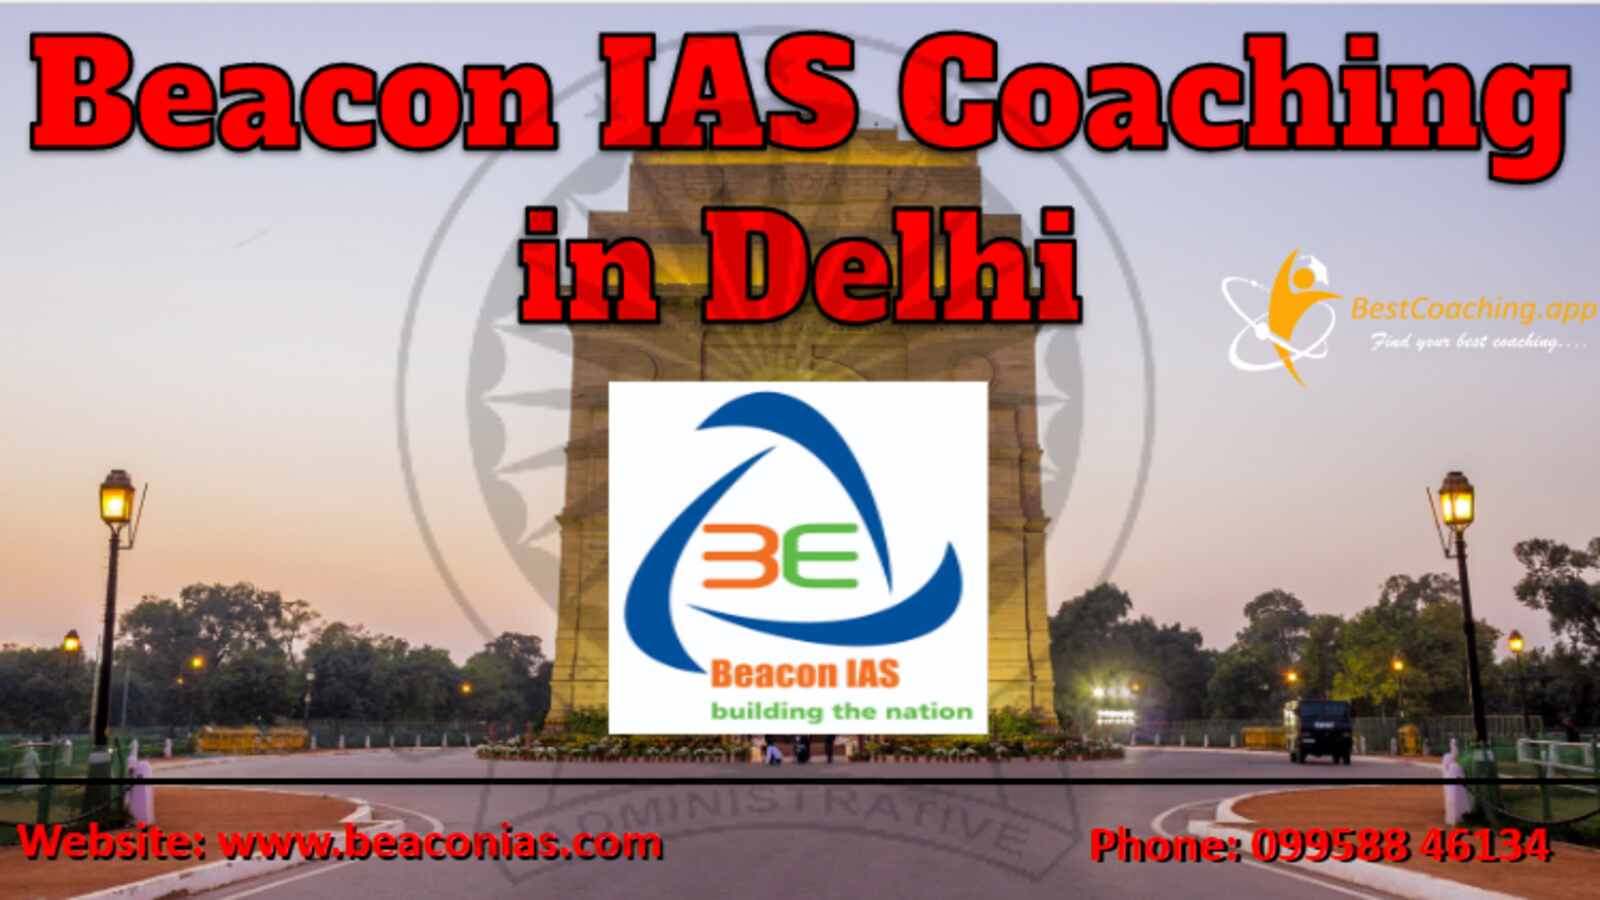 Beacon IAS Coaching in Delhi